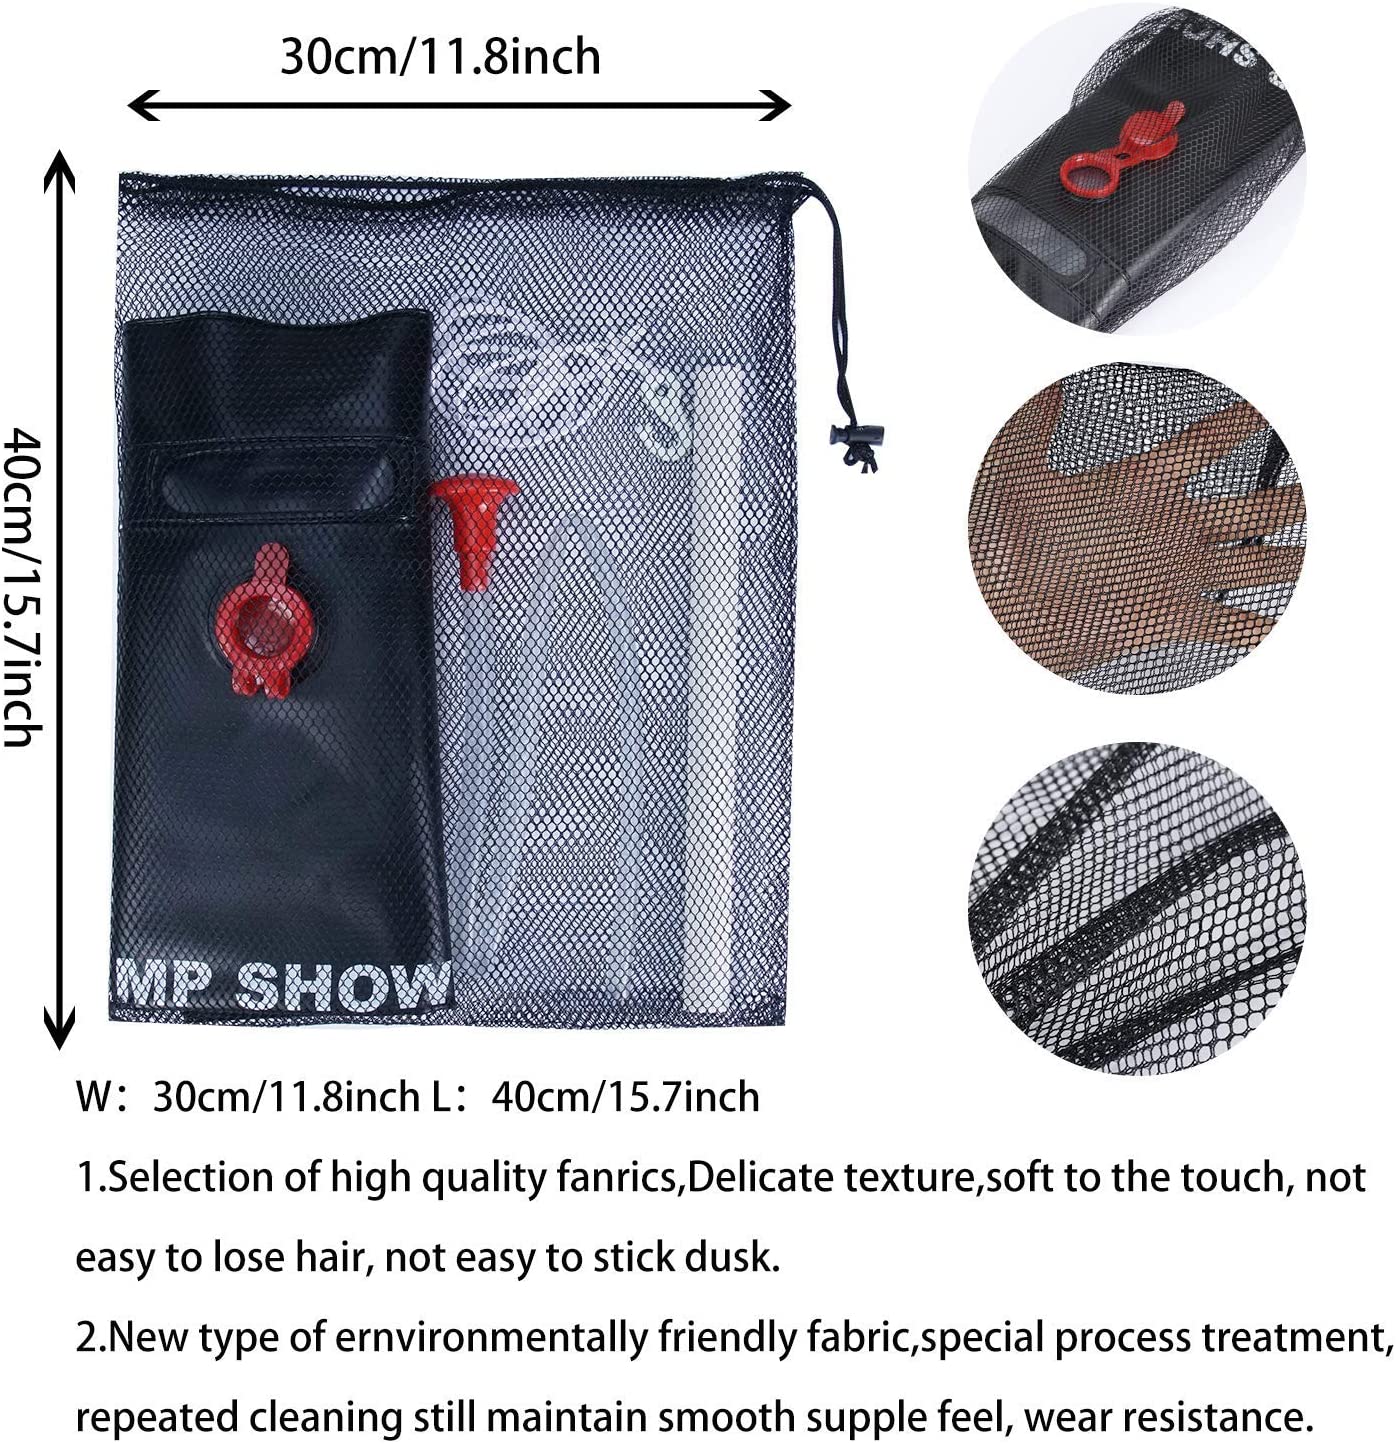 VABNEER Camping Shower Bag, 20L Solar Shower Bag with Removable Hose & On-Off Switchable Shower Head & Black Mesh Drawstring Bag . - e4cents